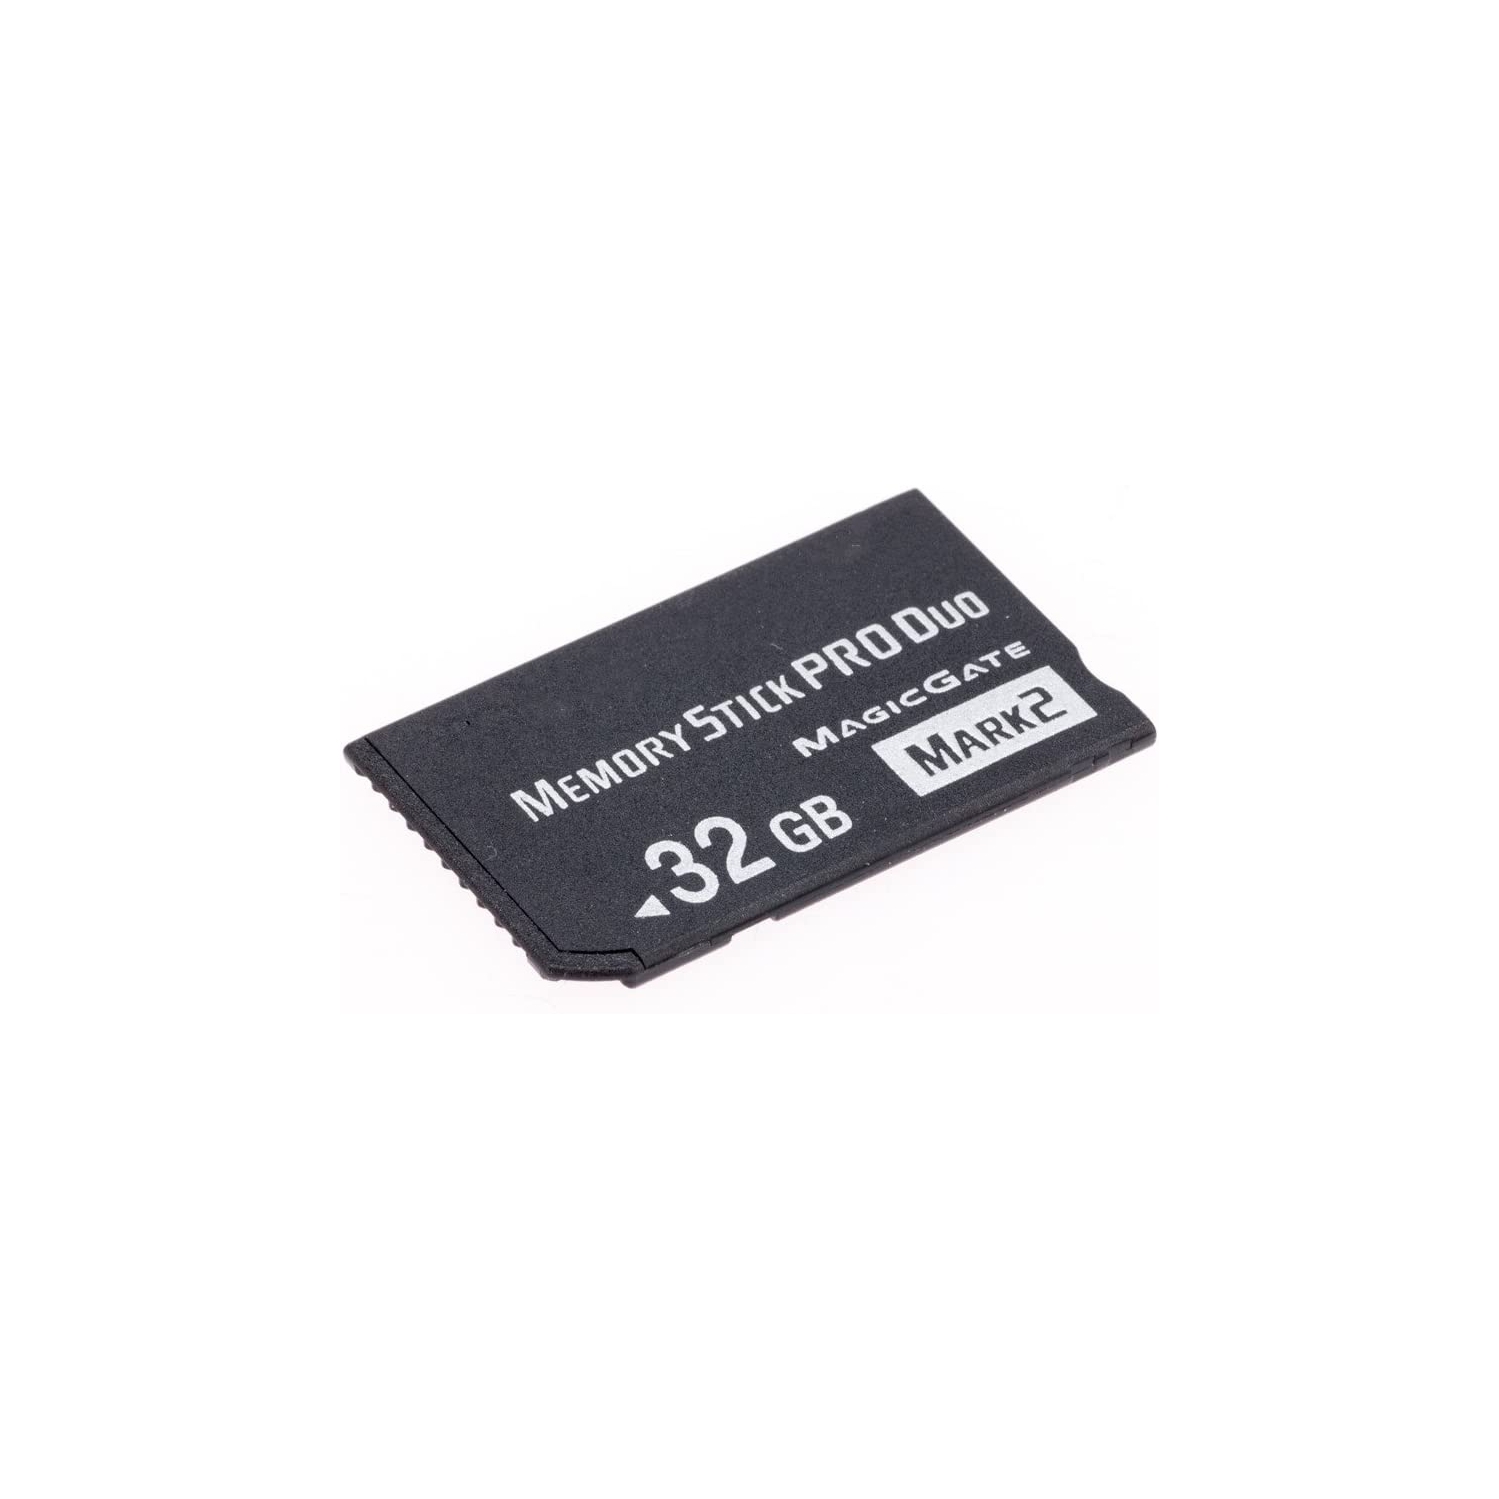 32GB(Mark 2) High Speed Memory Stick Pro-HG Duo for Gig Digital Camera PSP 1000 2000 3000 PSP